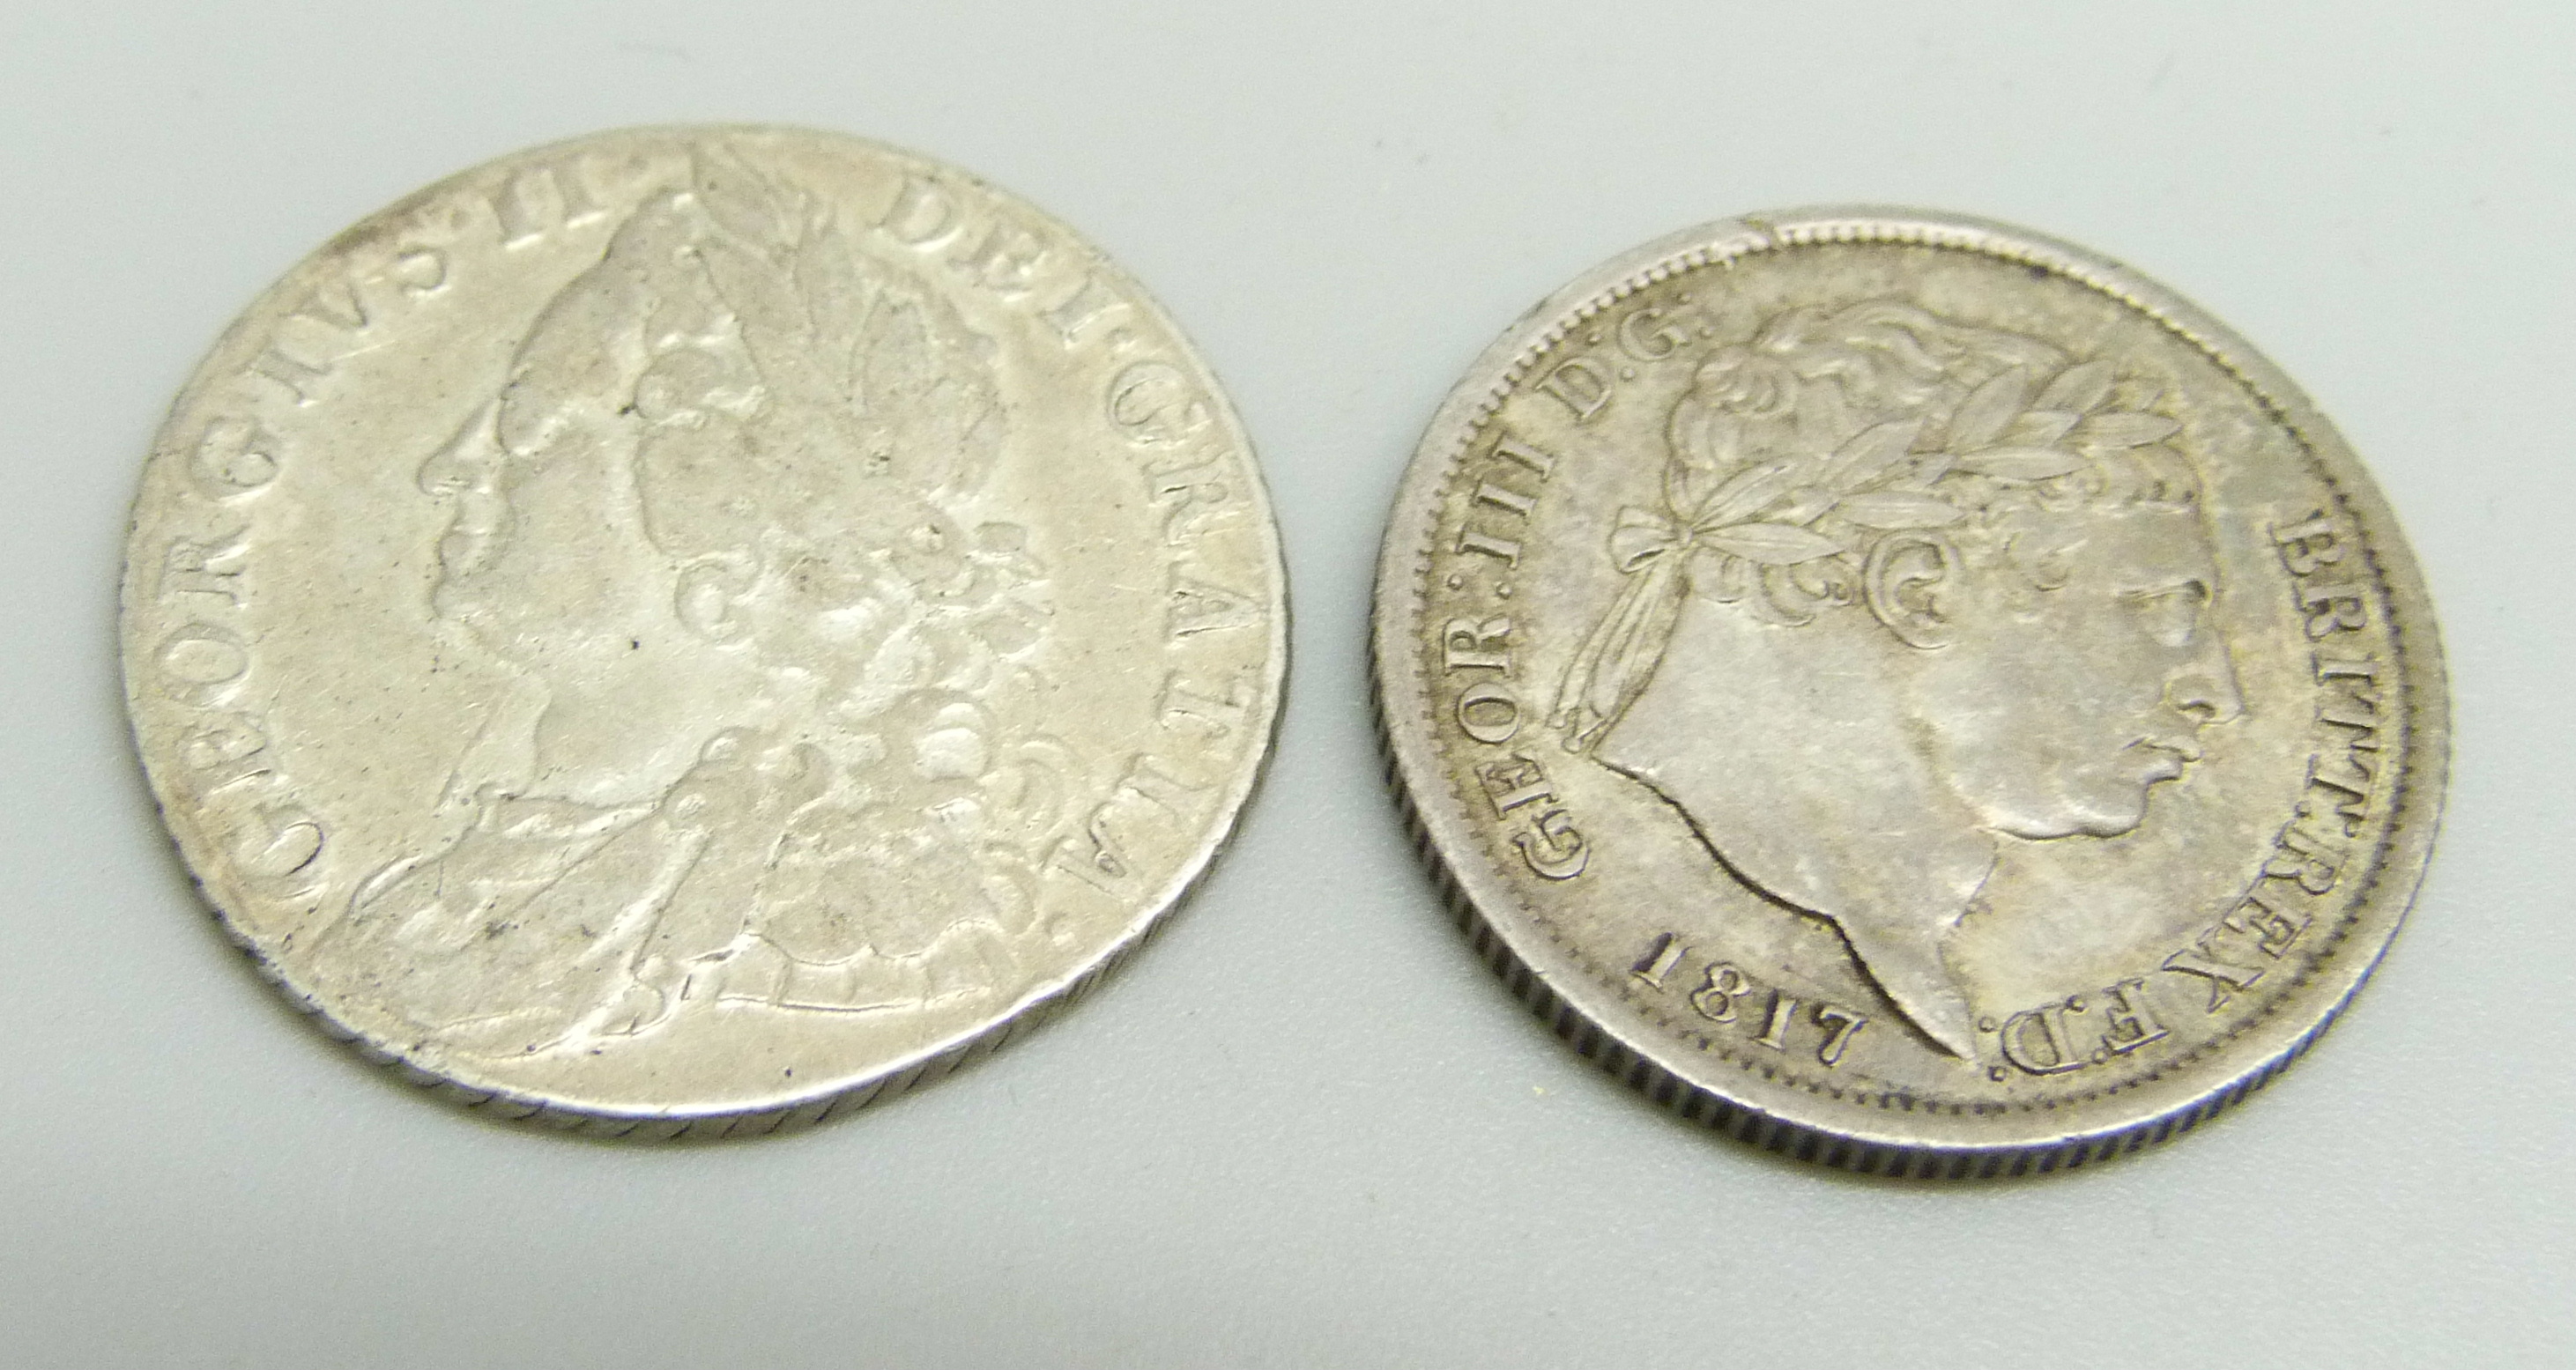 A George III shilling, 1817, and a George II shilling, 1758